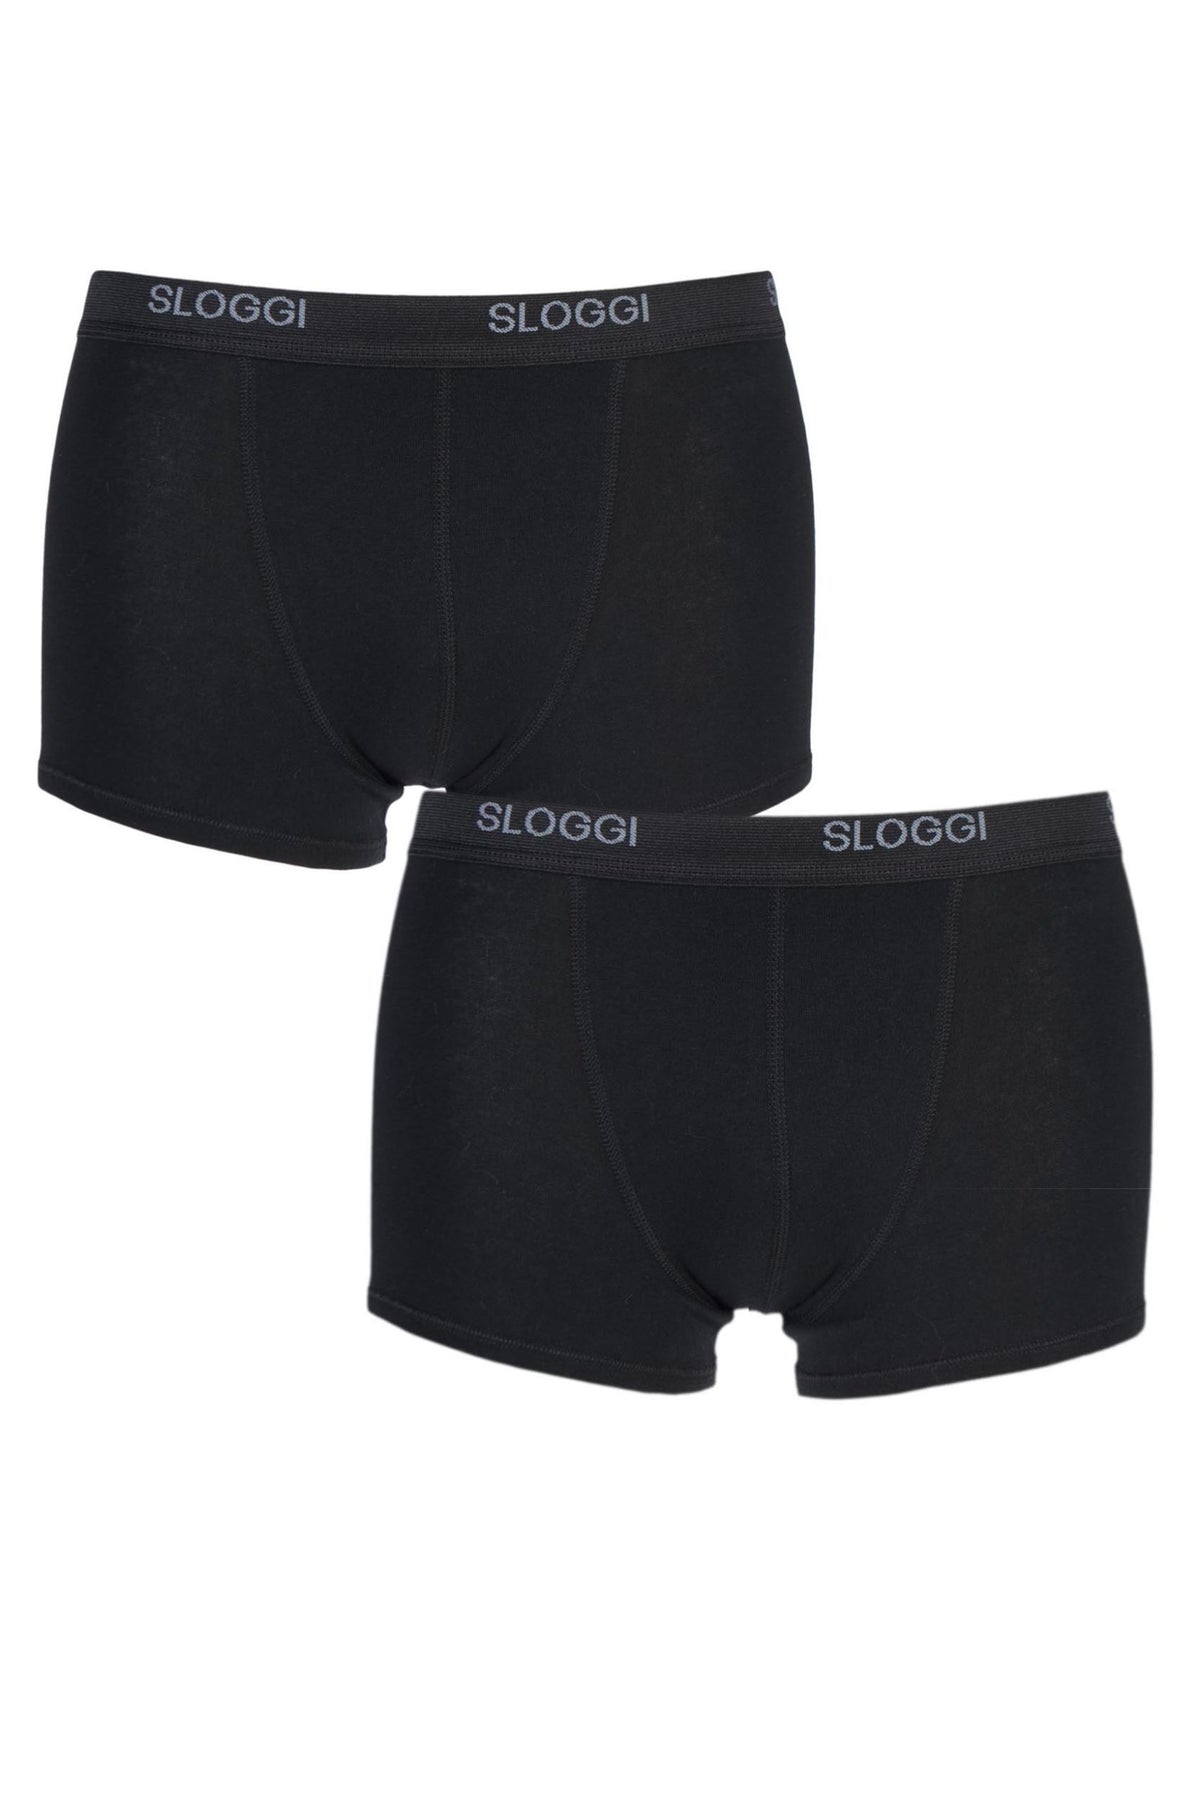 Sloggi Men&#39;s Basic Short Boxer Shorts Briefs Pants 2 Pack 10020415 Black